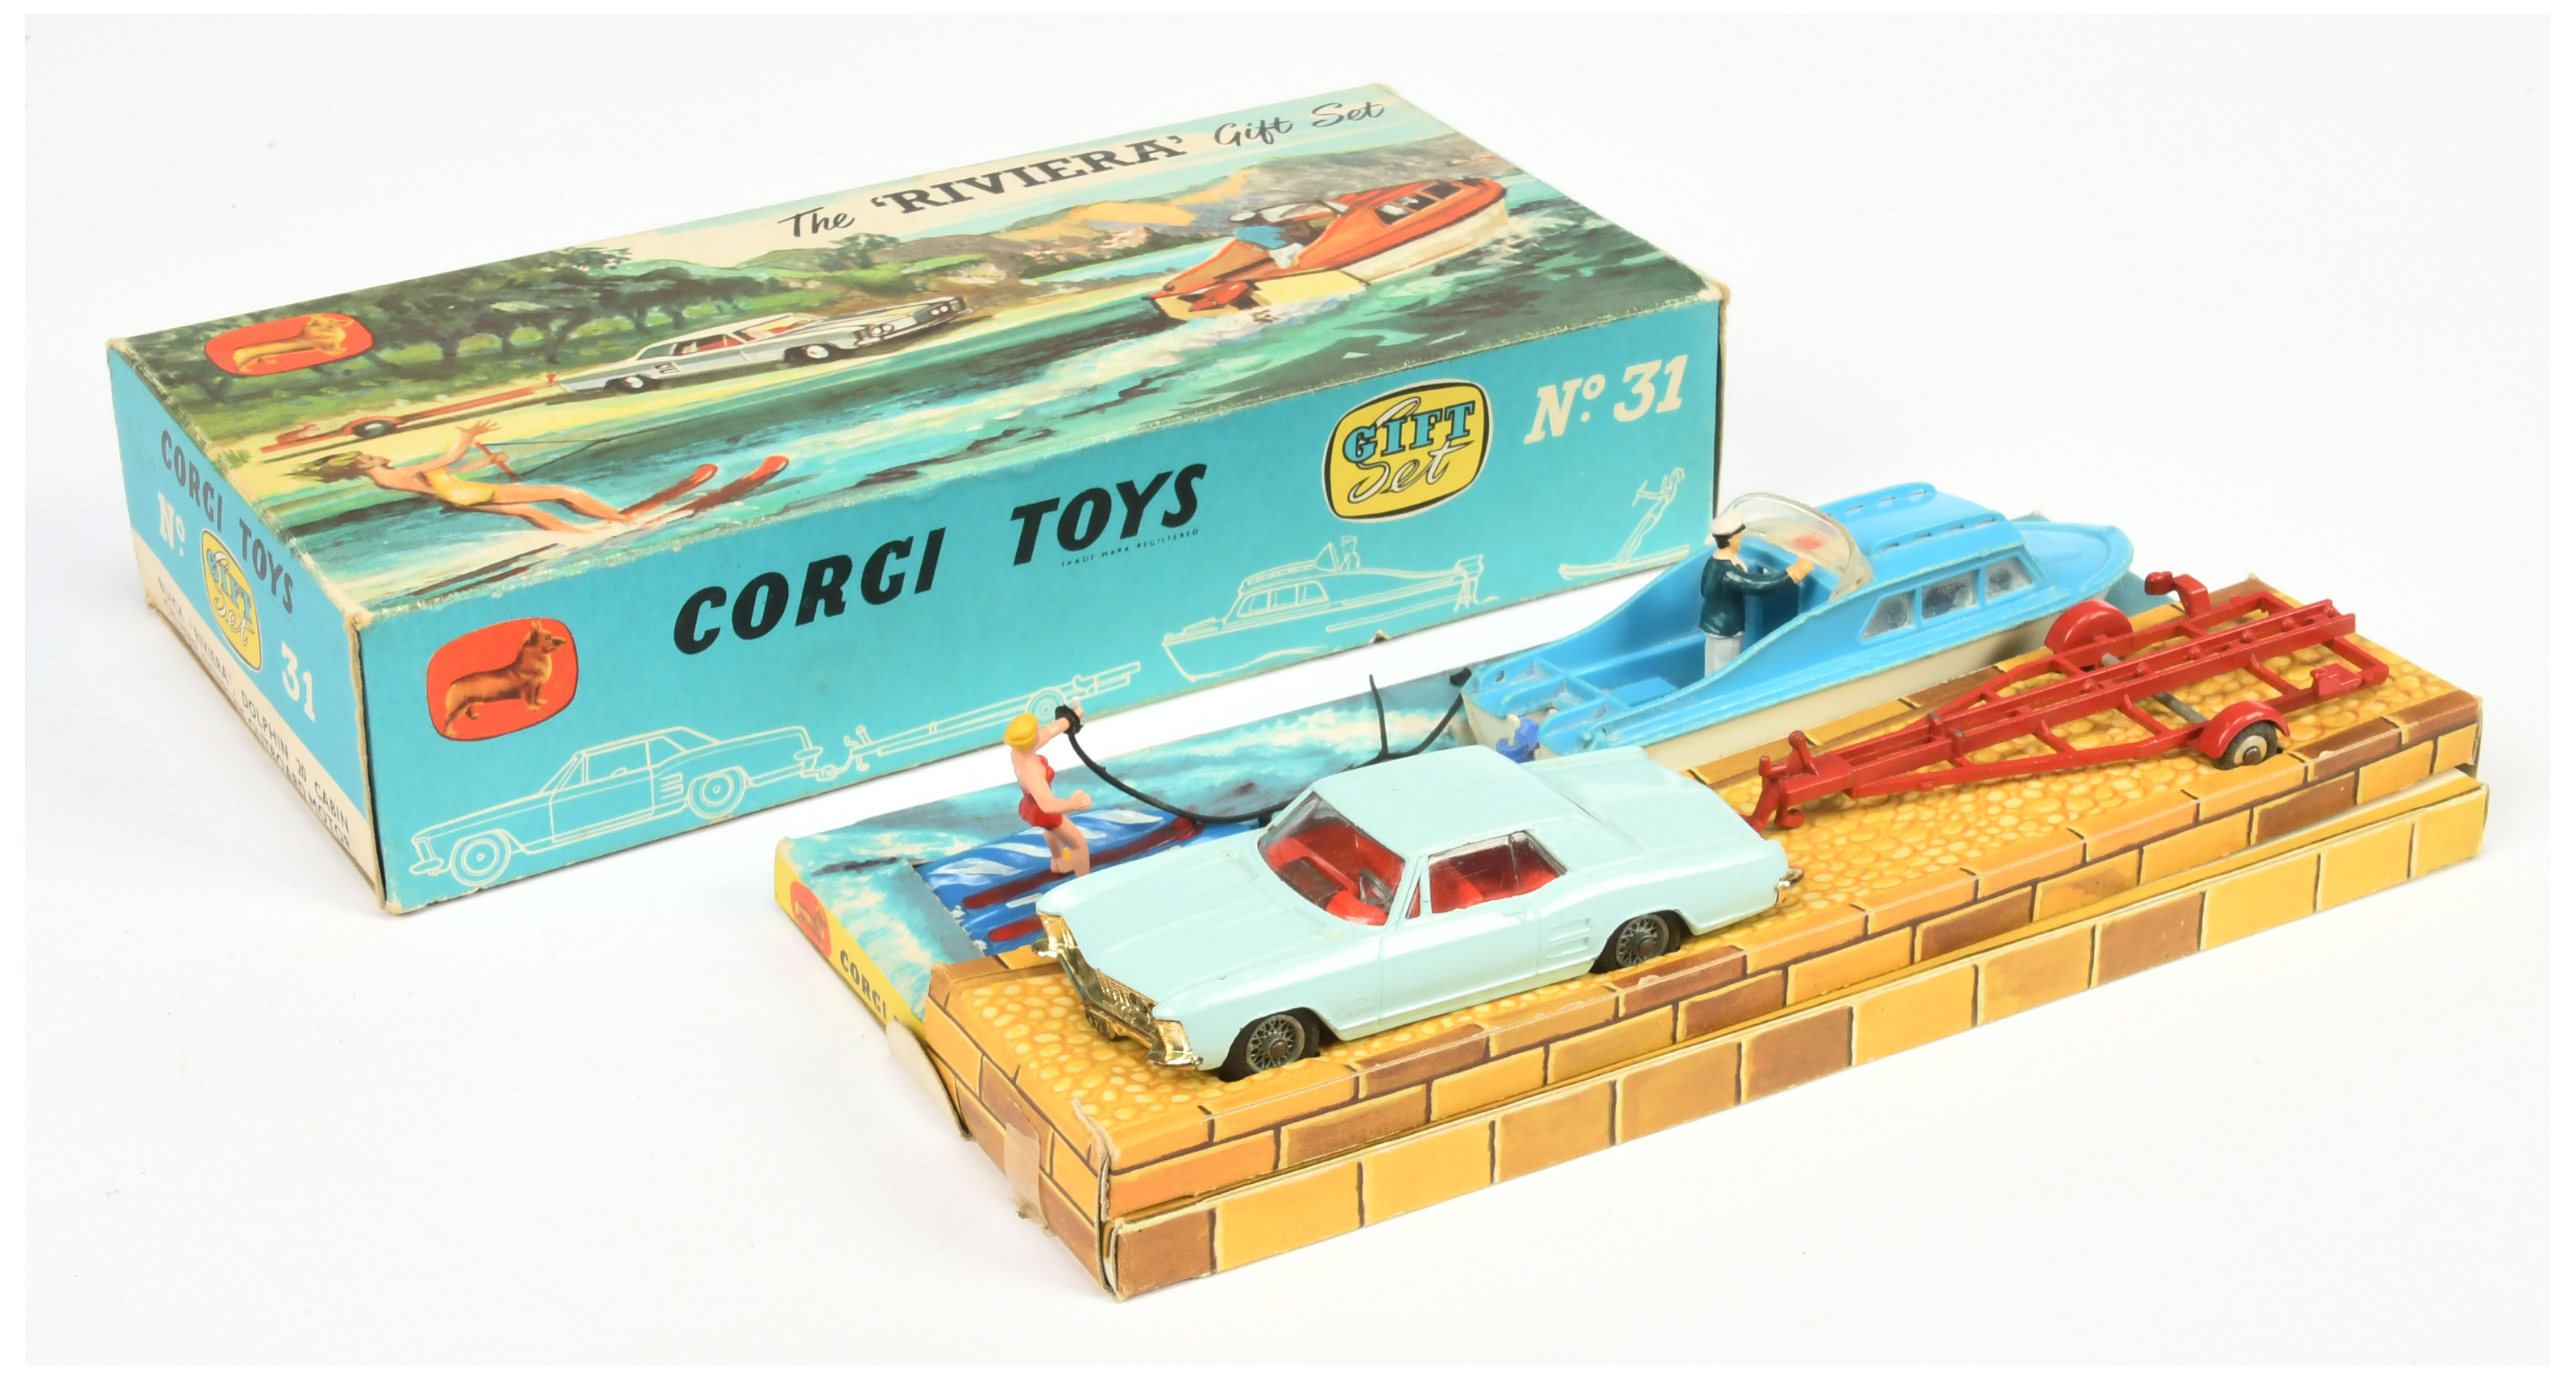 Corgi Toys GS31 "Riviera" Gift Set to include Buick Rivera - Light Blue, red interior, chrome tri... - Image 2 of 2